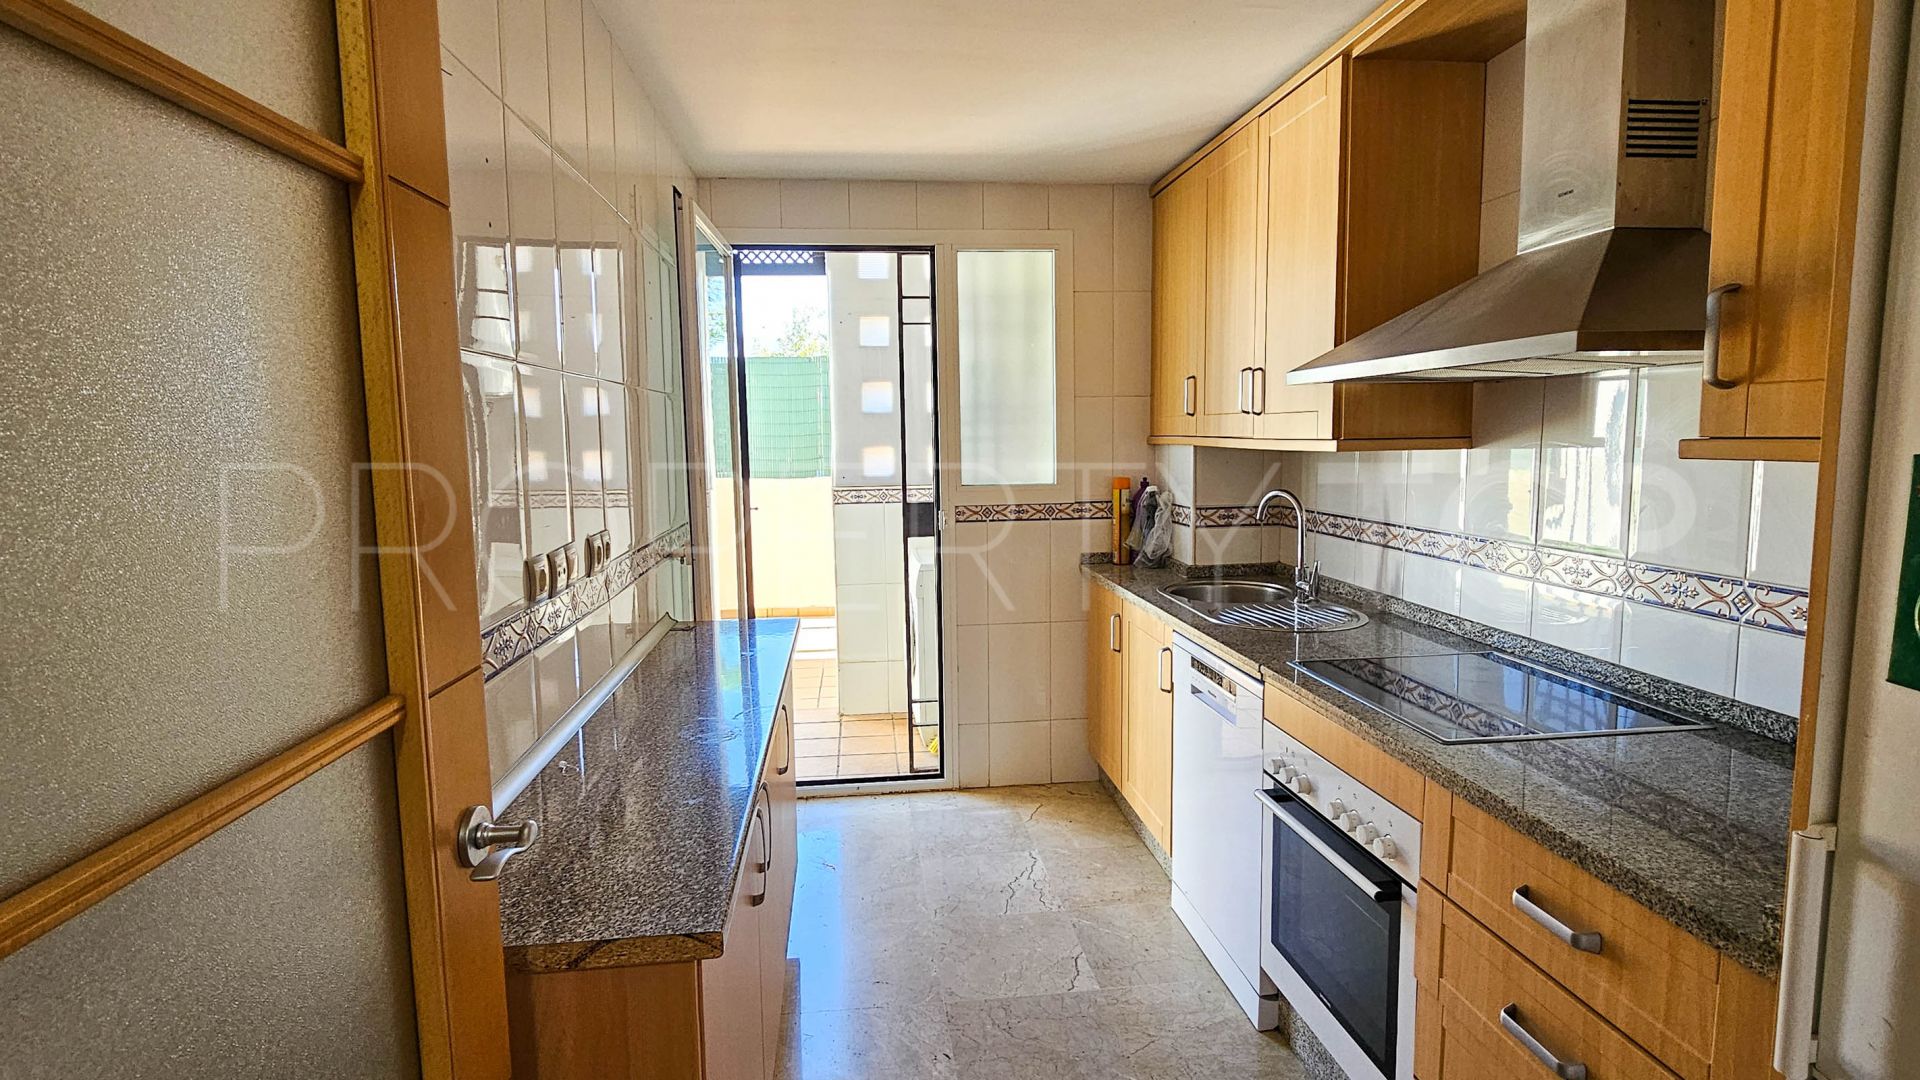 2 bedrooms ground floor apartment in Sabinillas for sale